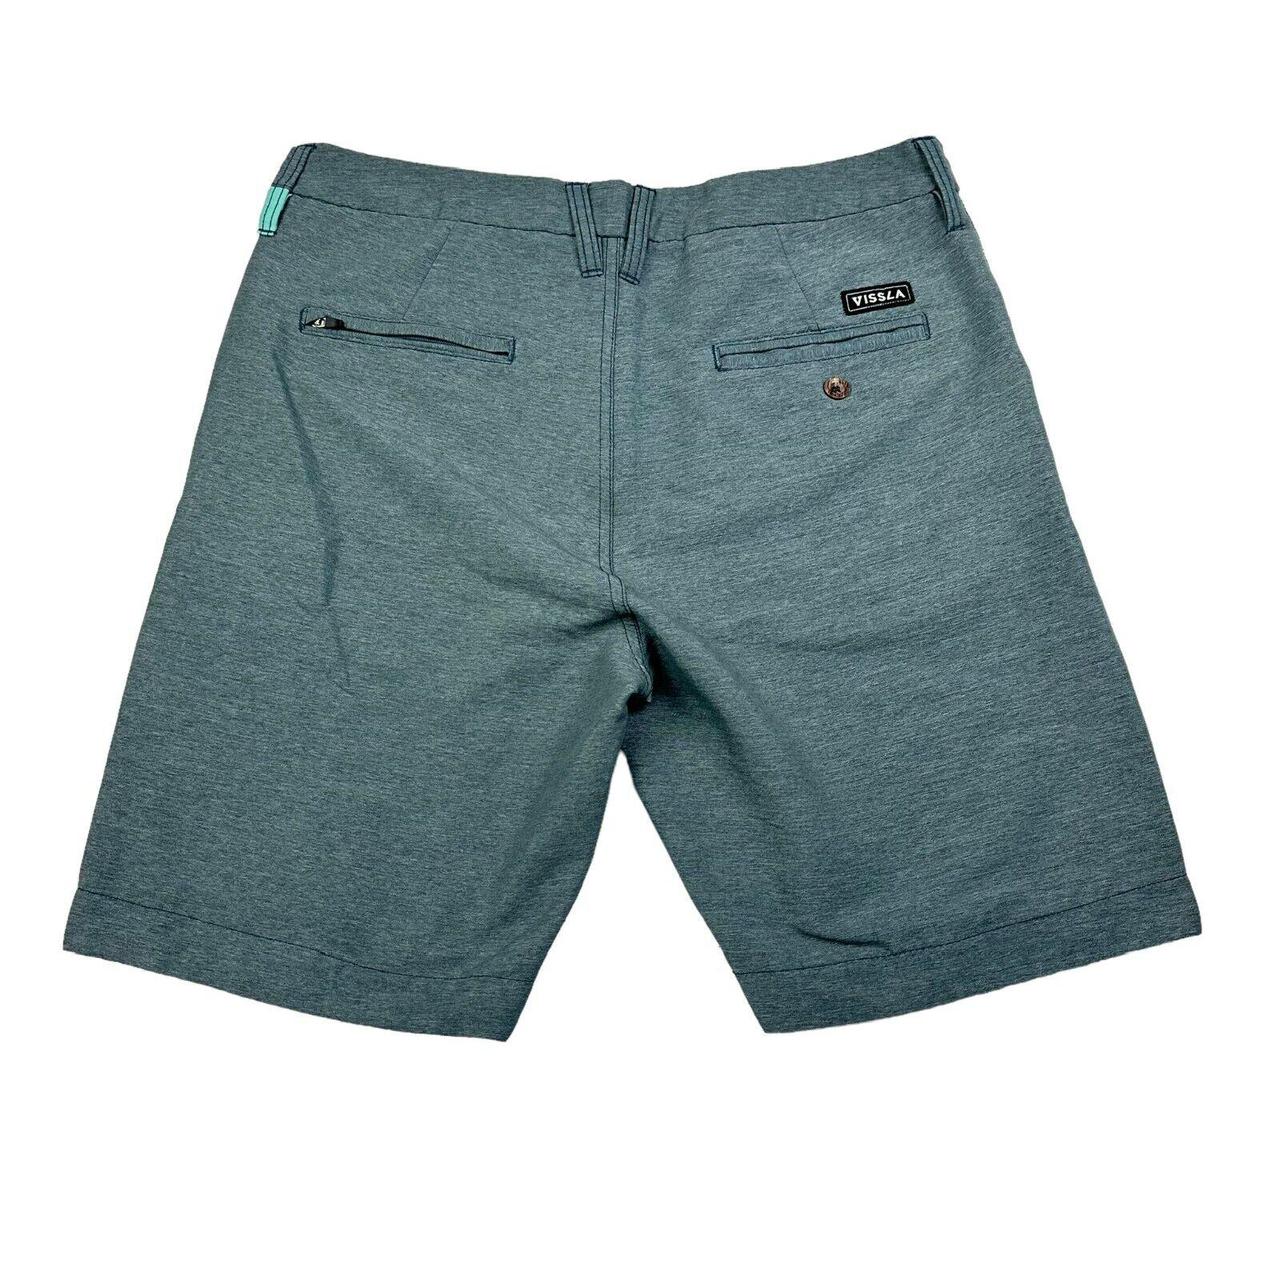 Vissla Men's Green Shorts | Depop